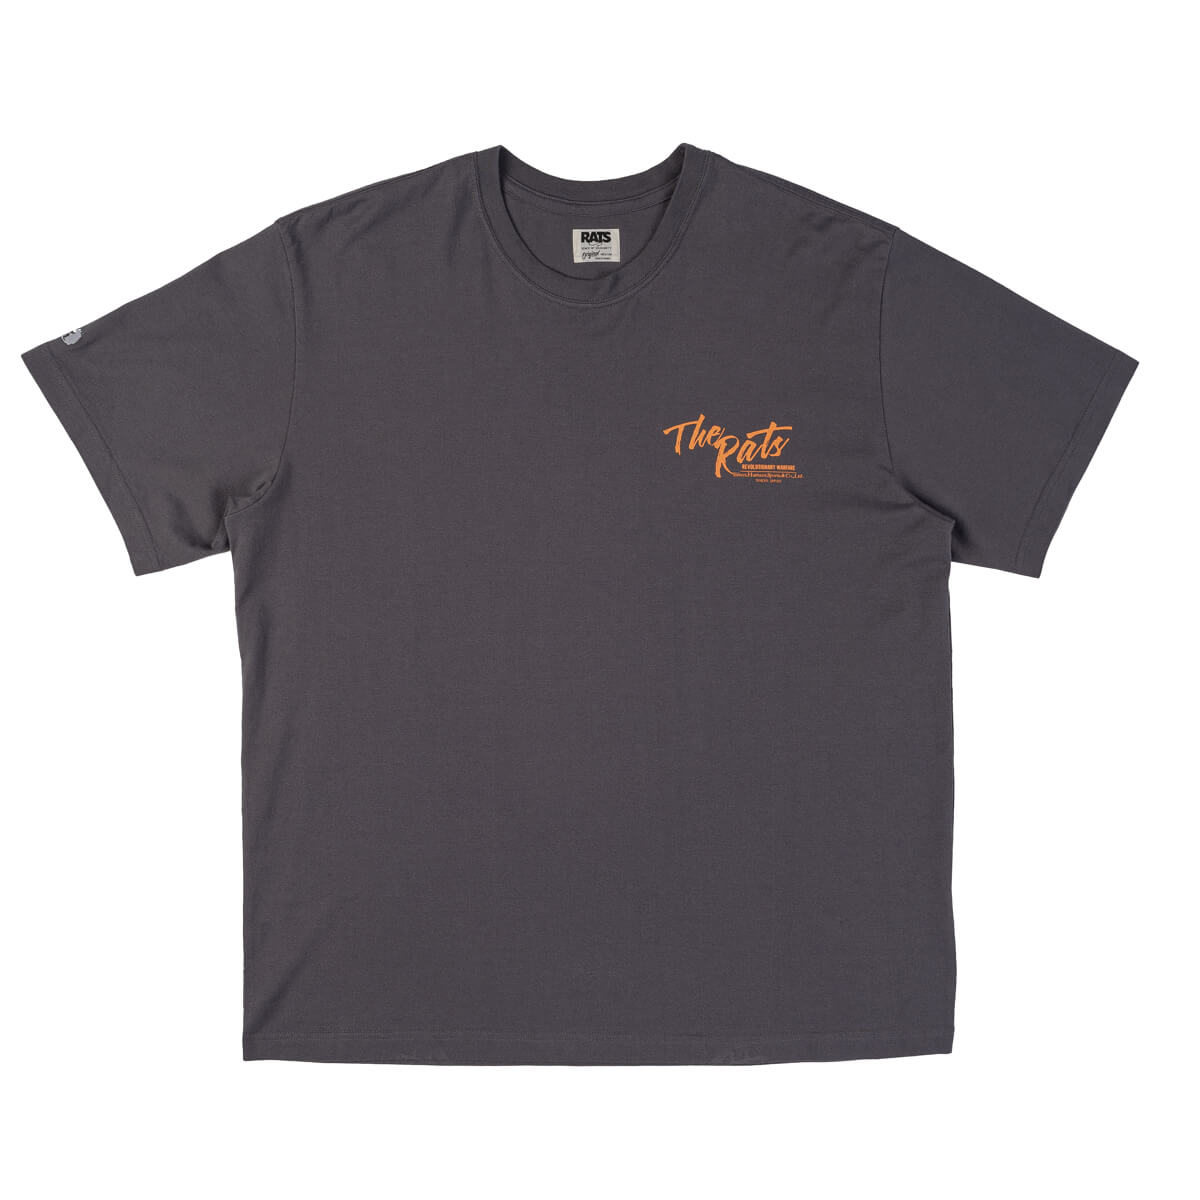 "The Rats" T-Shirt - Grey